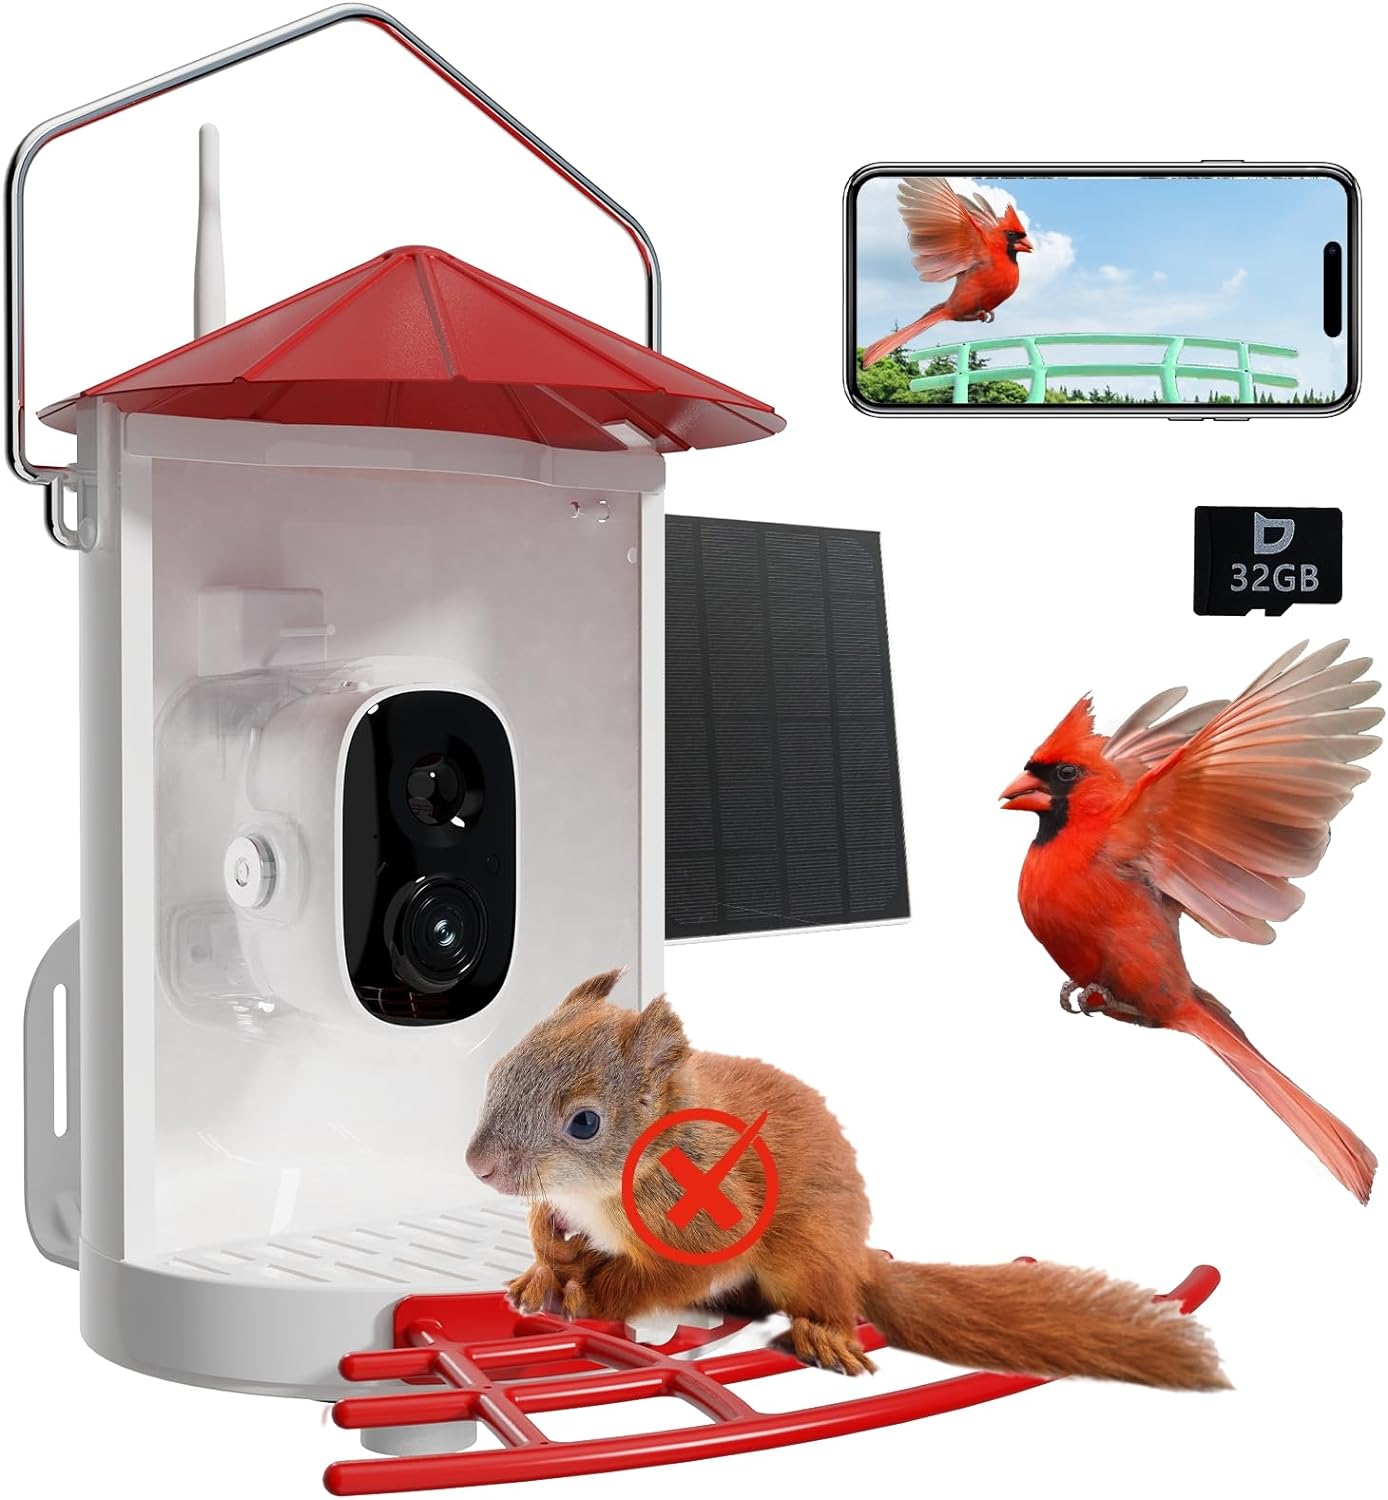 Metal Squirrel Proof Bird Feeder with Camera